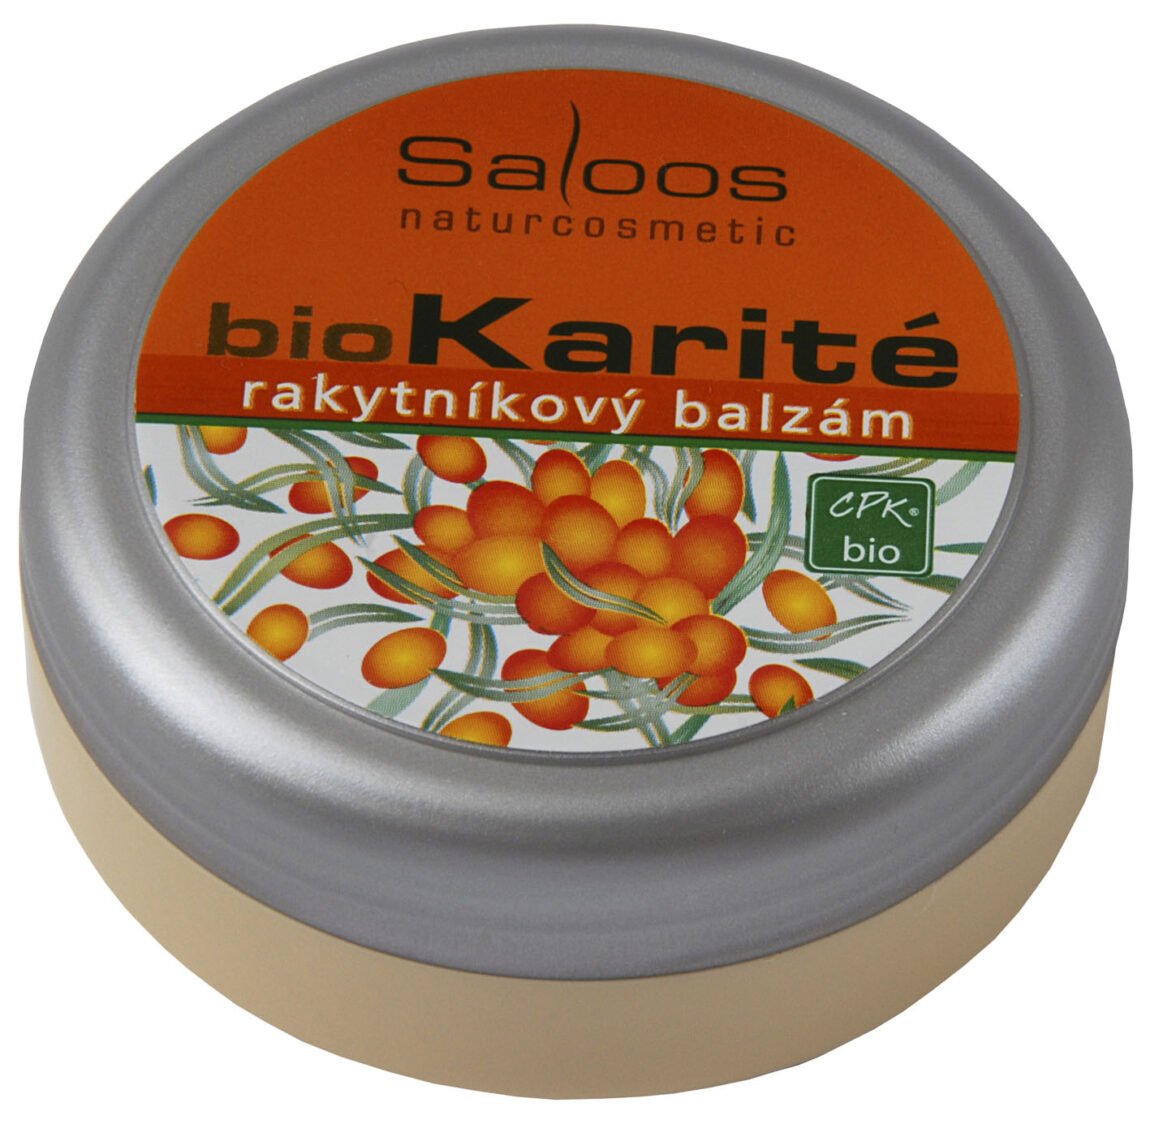 Saloos Bio karité - Balzám z rakytníku řešetlákového 19 19 ml